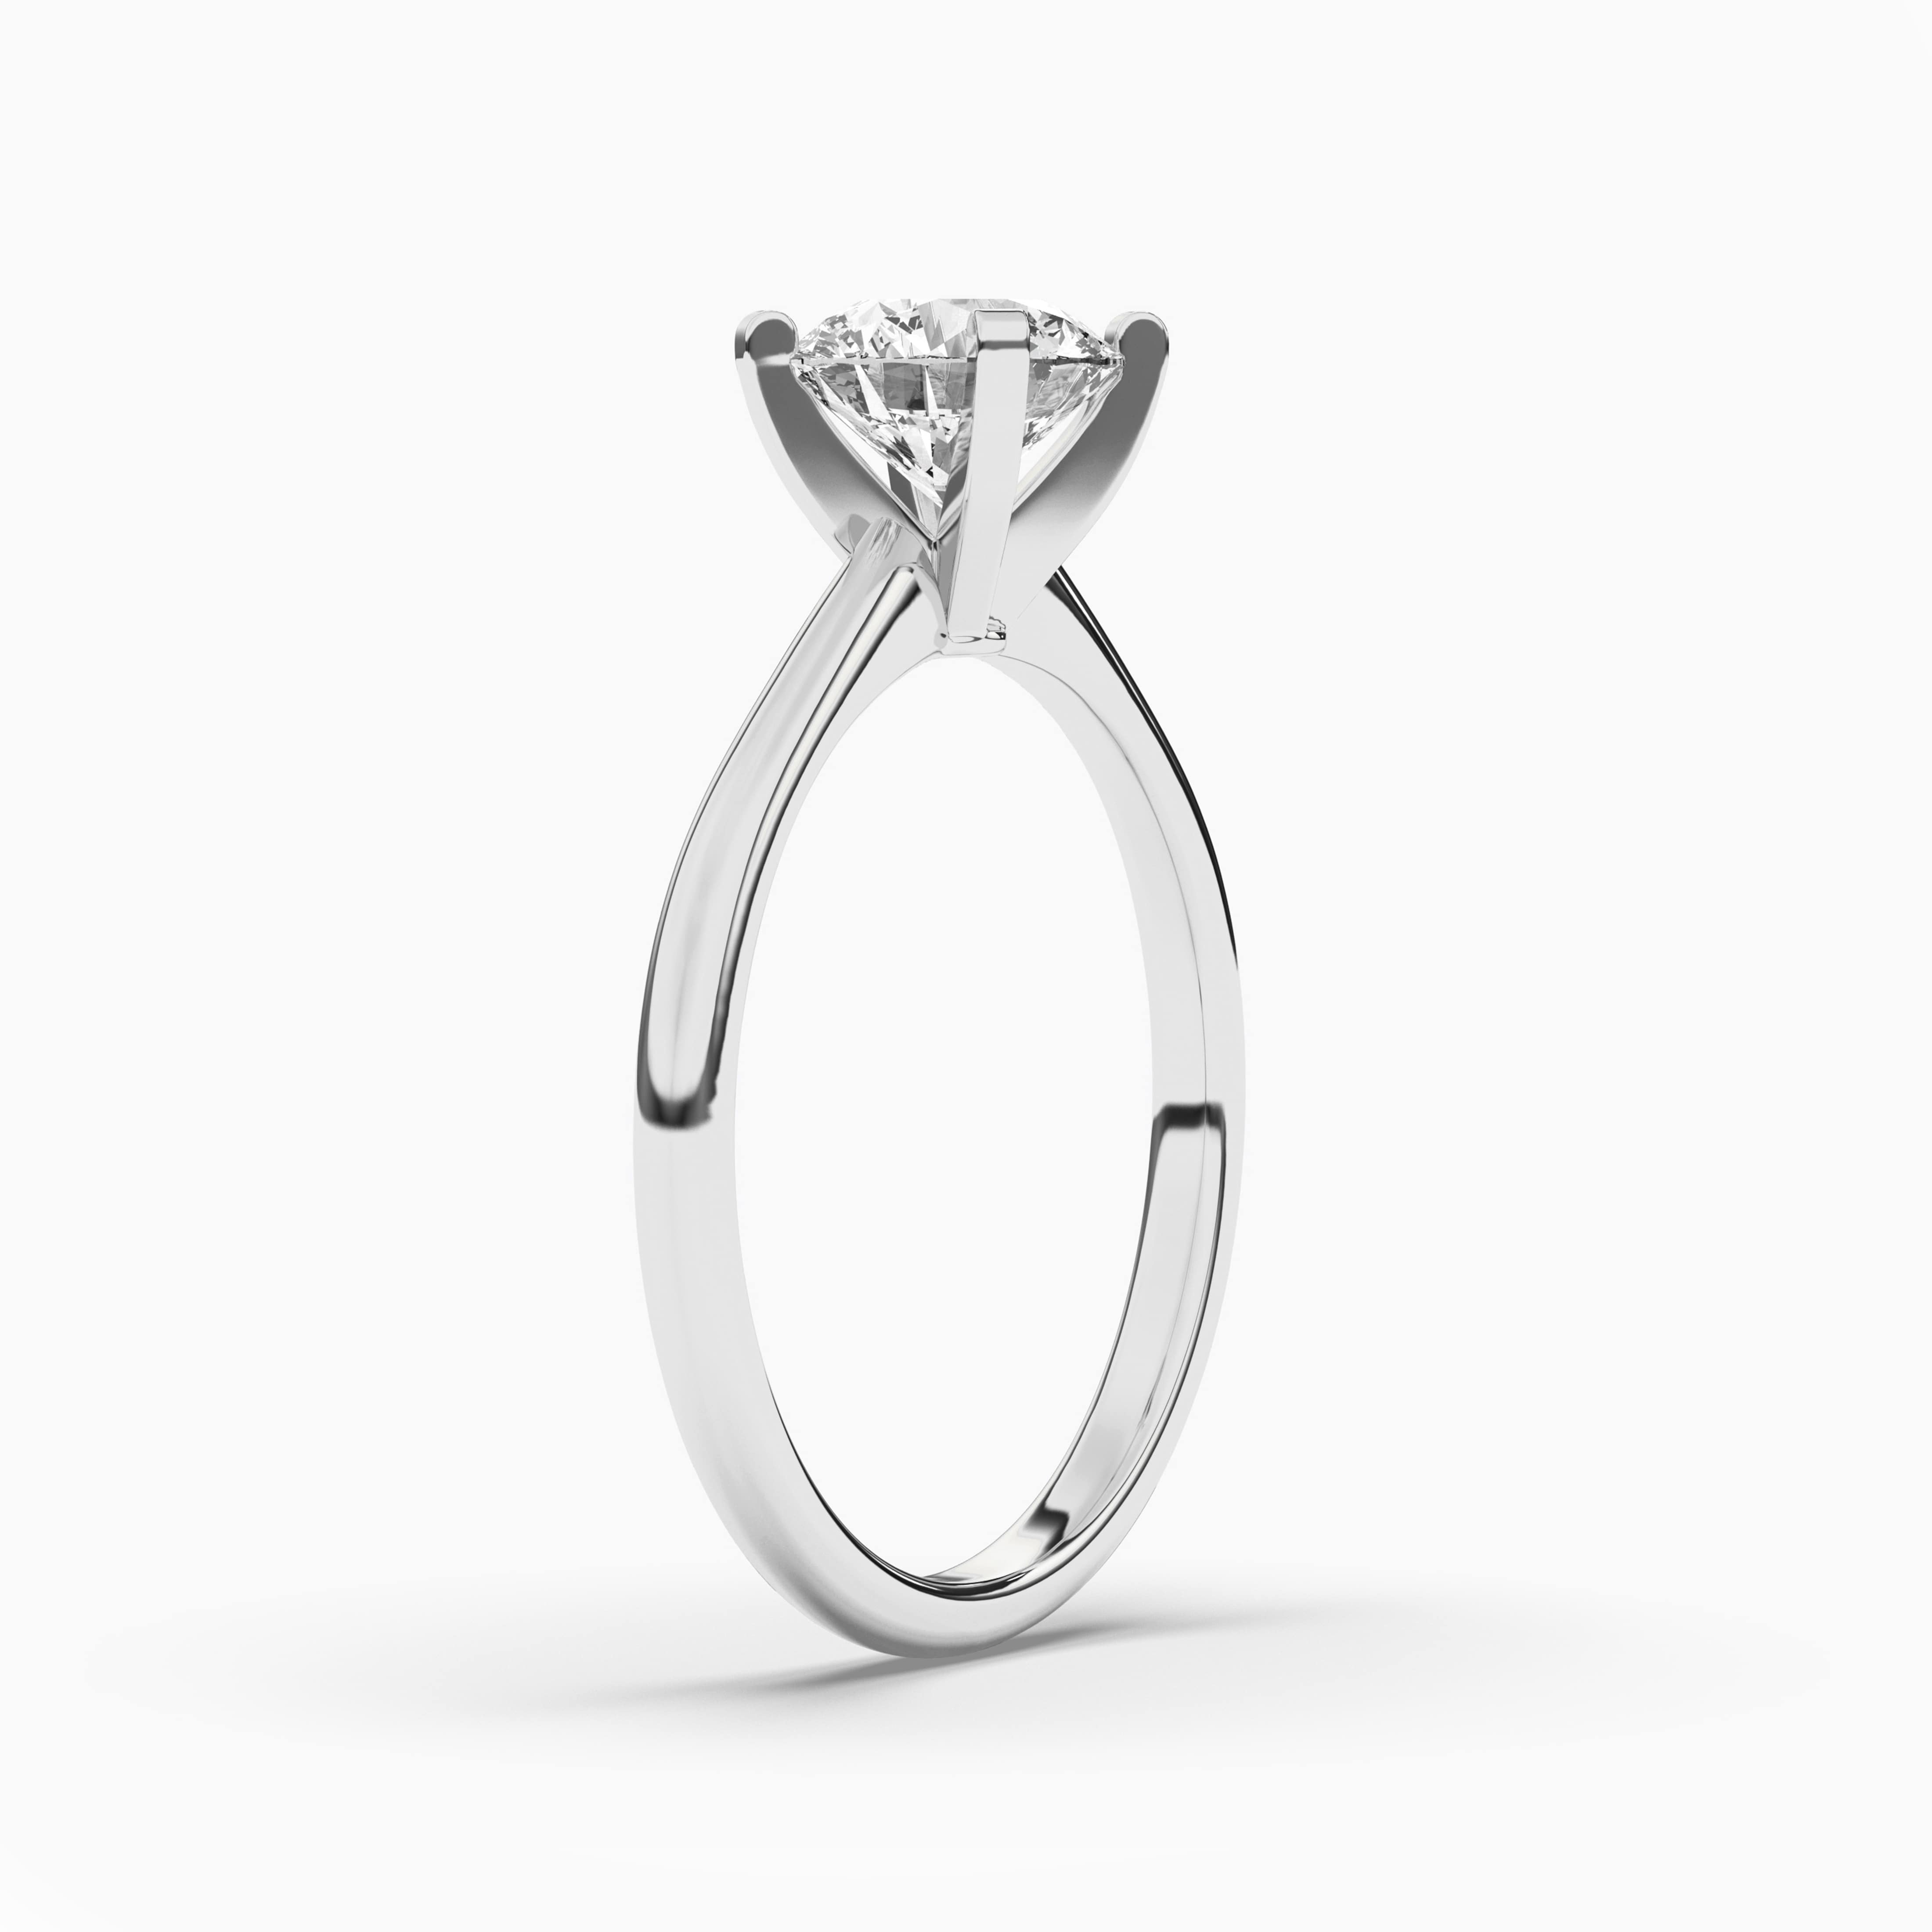 Round Cut Moissanite Diamond Engagement Ring in White Gold